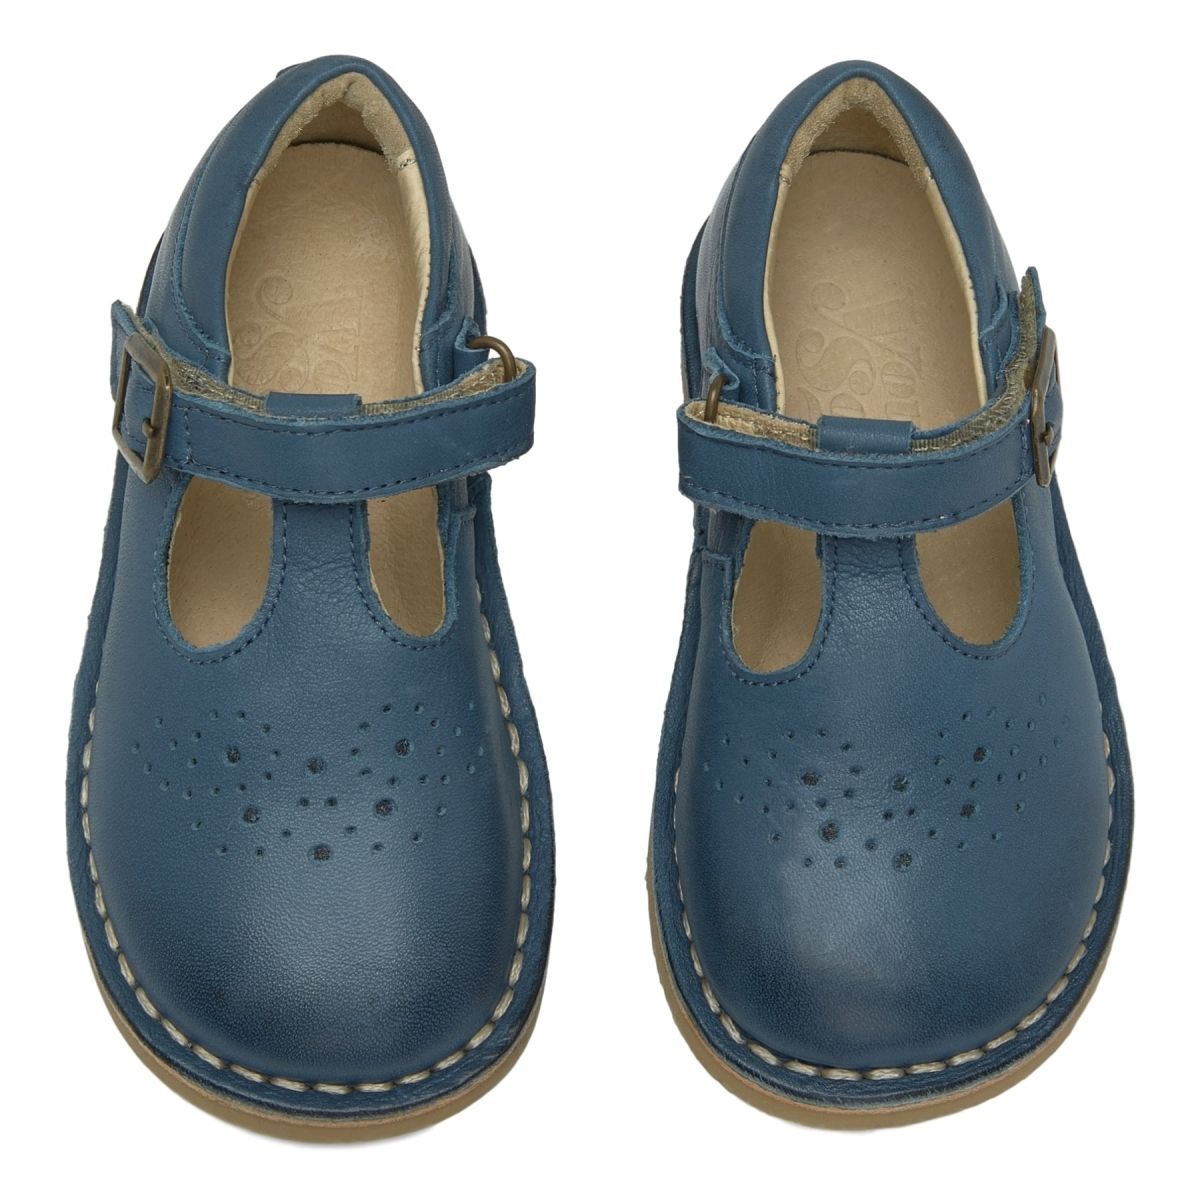 blue t bar shoes uk